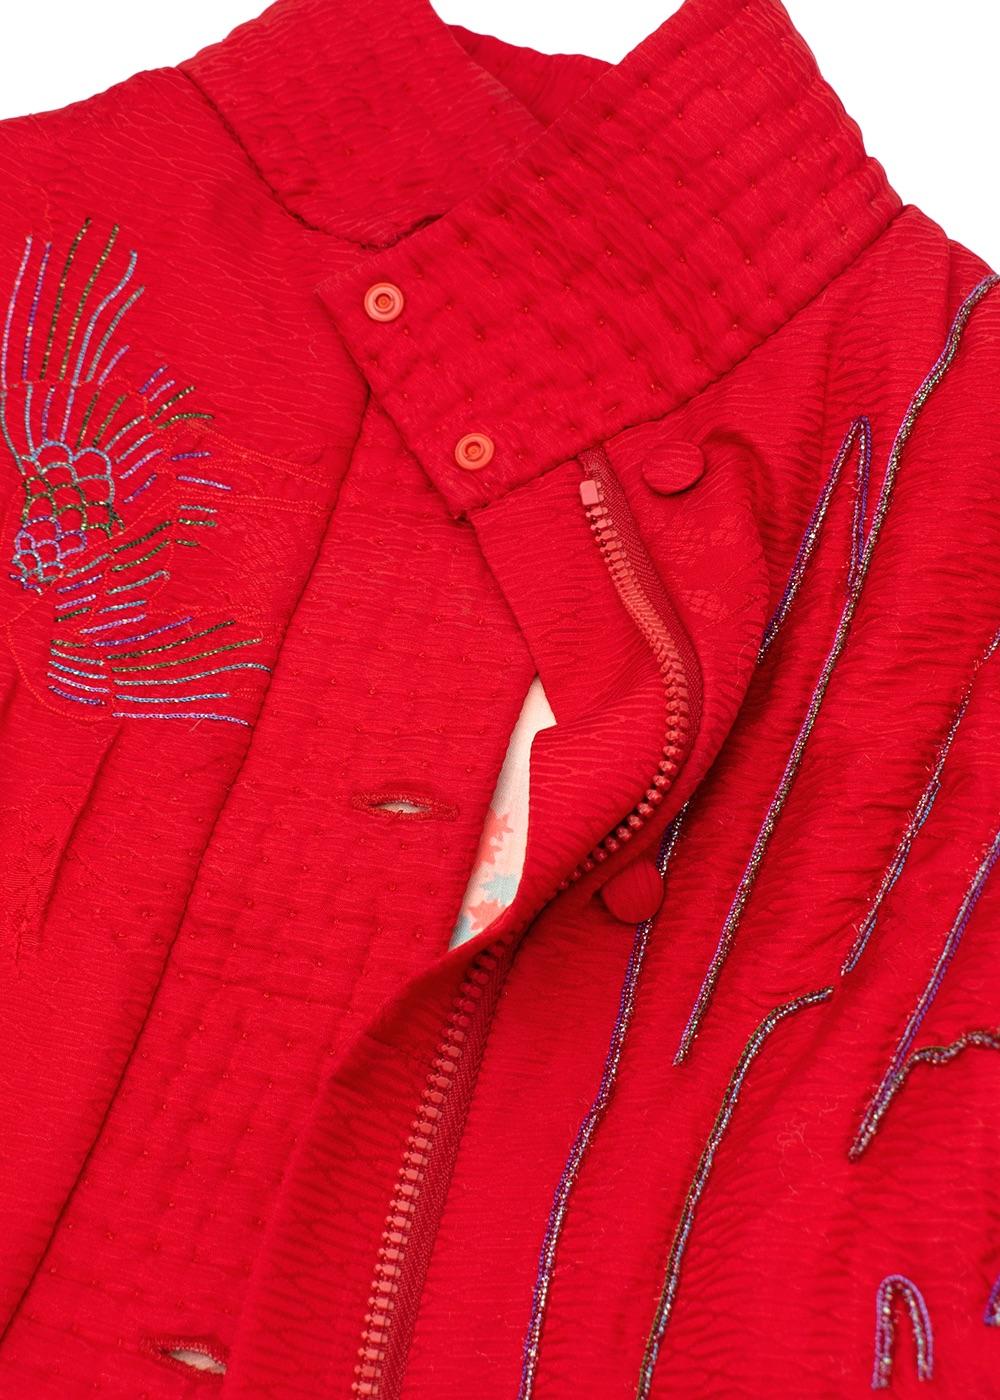 Maharishi Vintage Red Silk Phoenix Embroidered Jacket For Sale 2